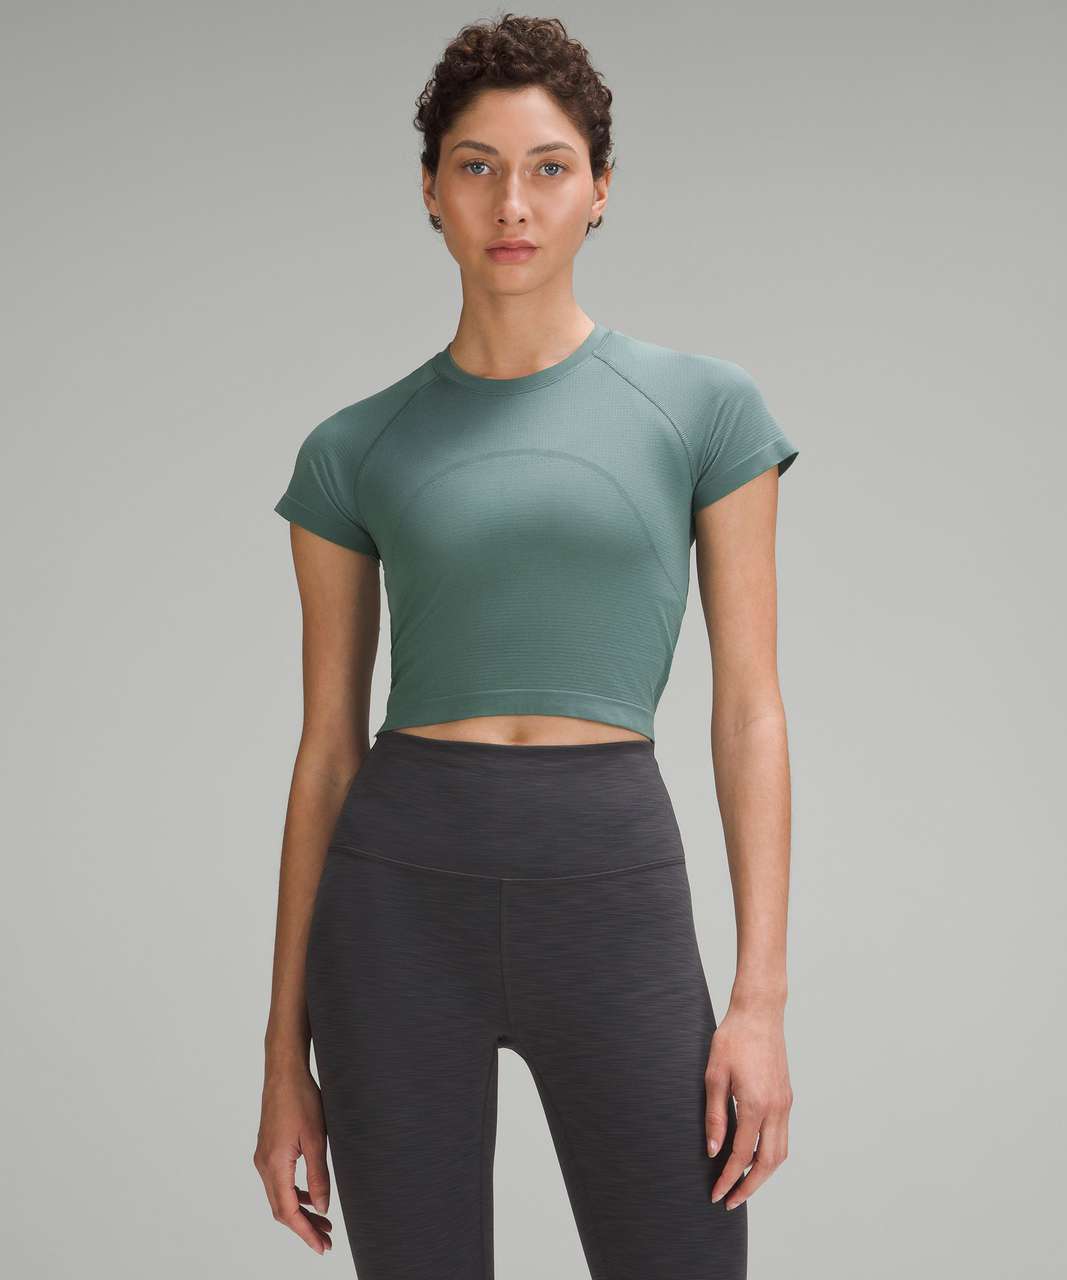 Lululemon Swiftly Tech Cropped Short-Sleeve Shirt 2.0 - Medium Forest / Medium Forest